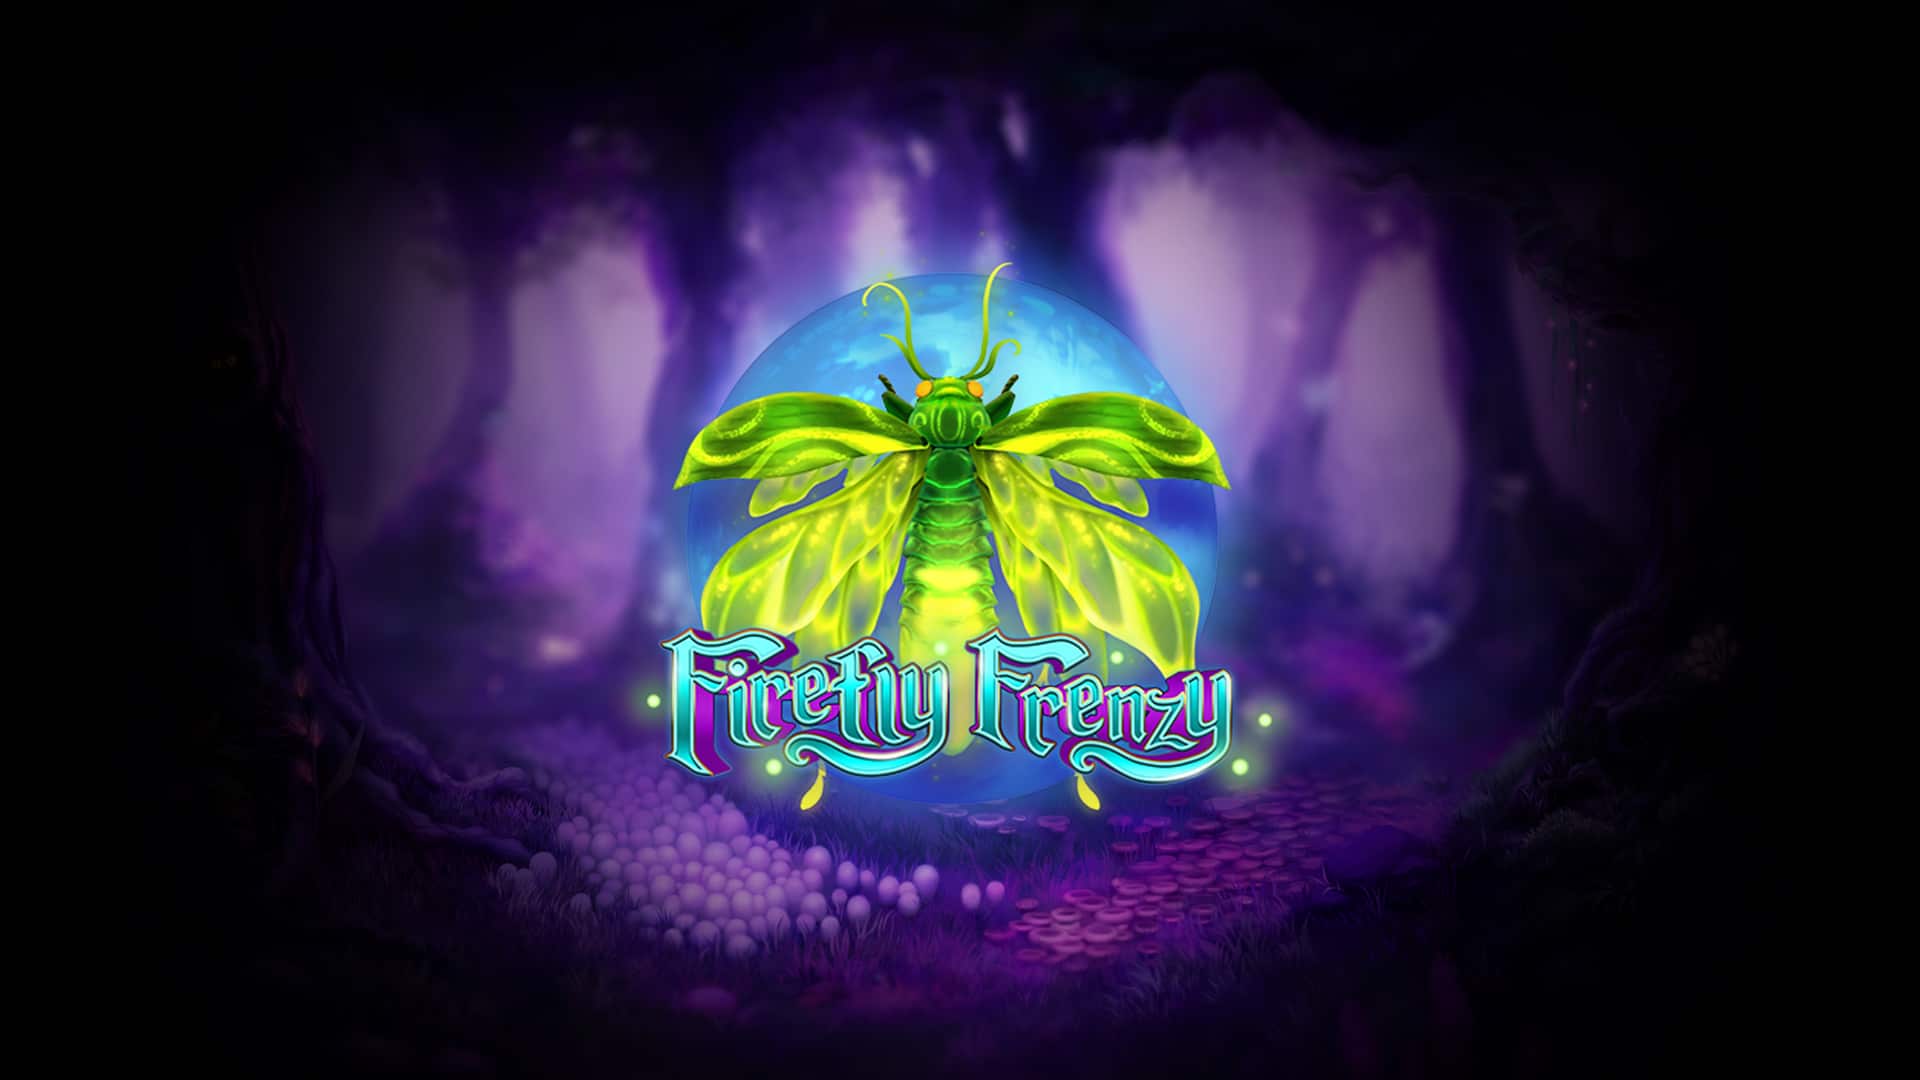 Fireflyfrenzy